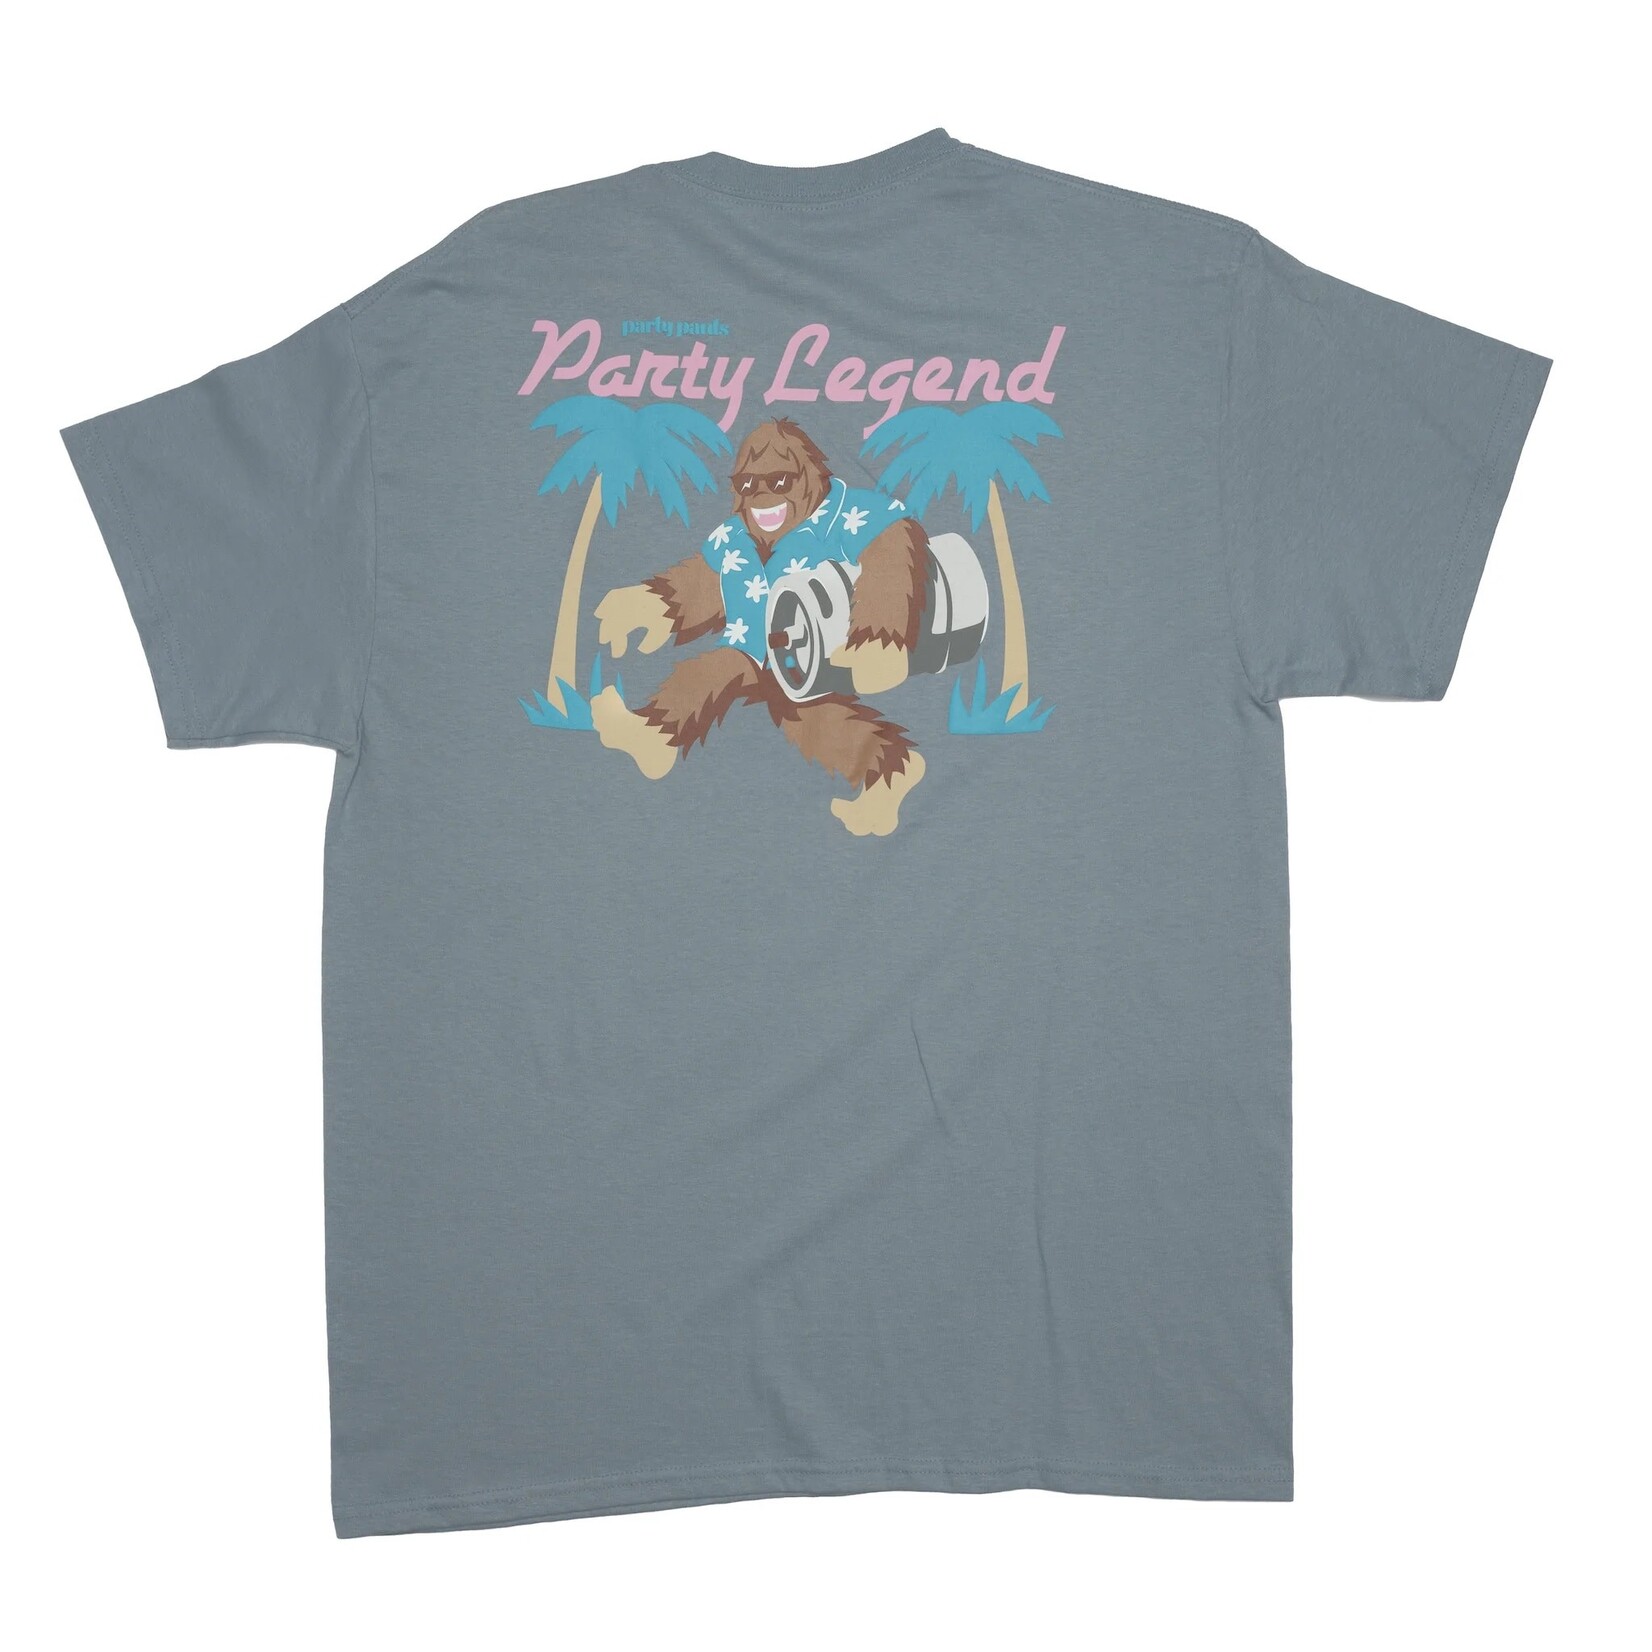 Party Pants Party legend s/s tee stone blue